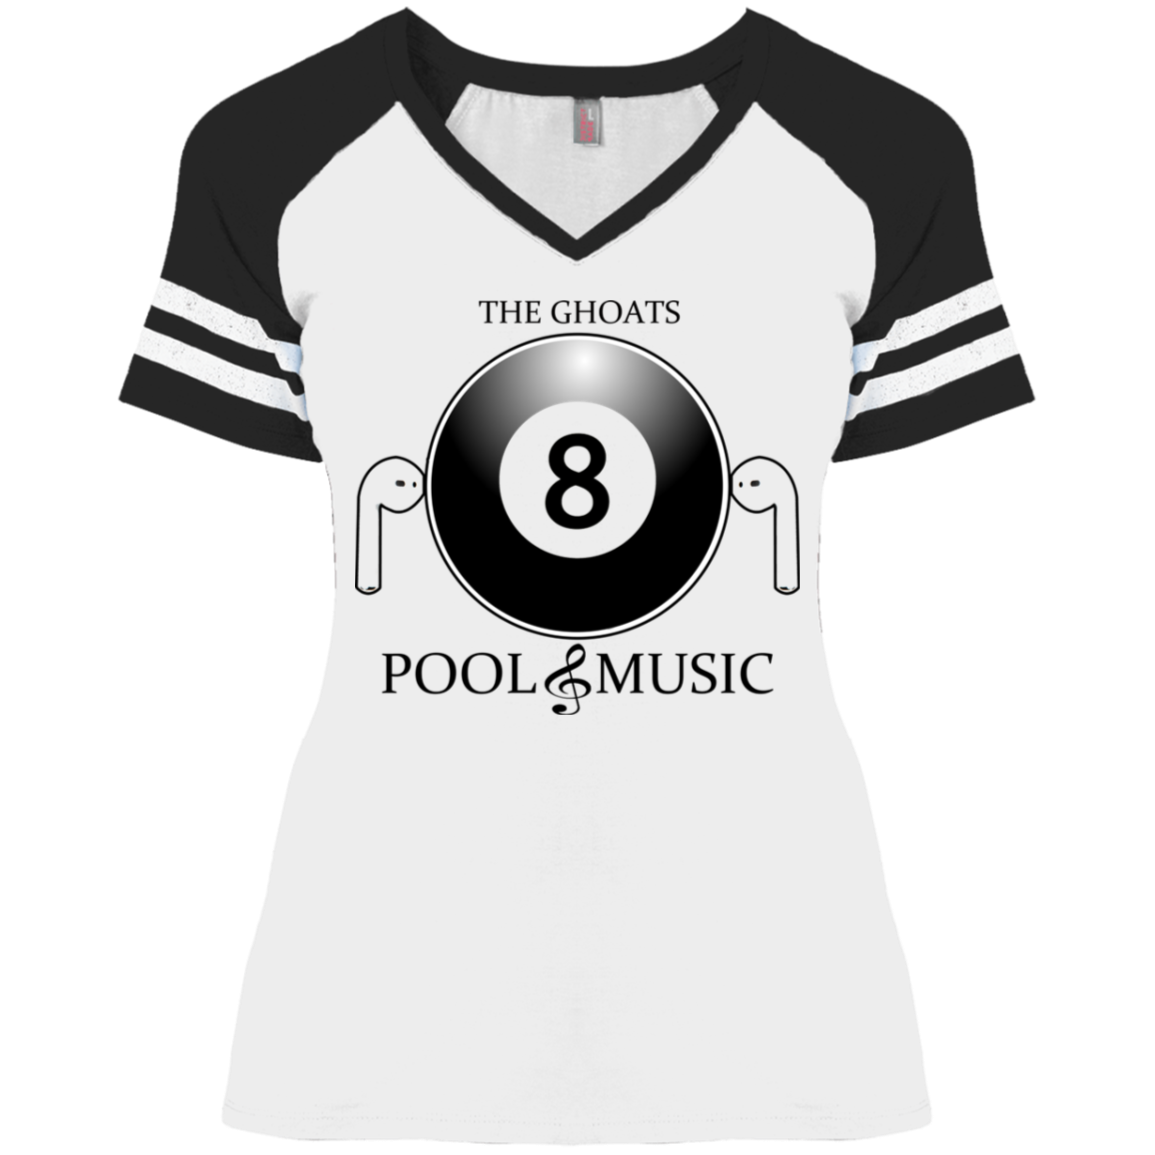 The GHOATS Custom Design. #19 Pool & Music. Ladies' Game V-Neck T-Shirt